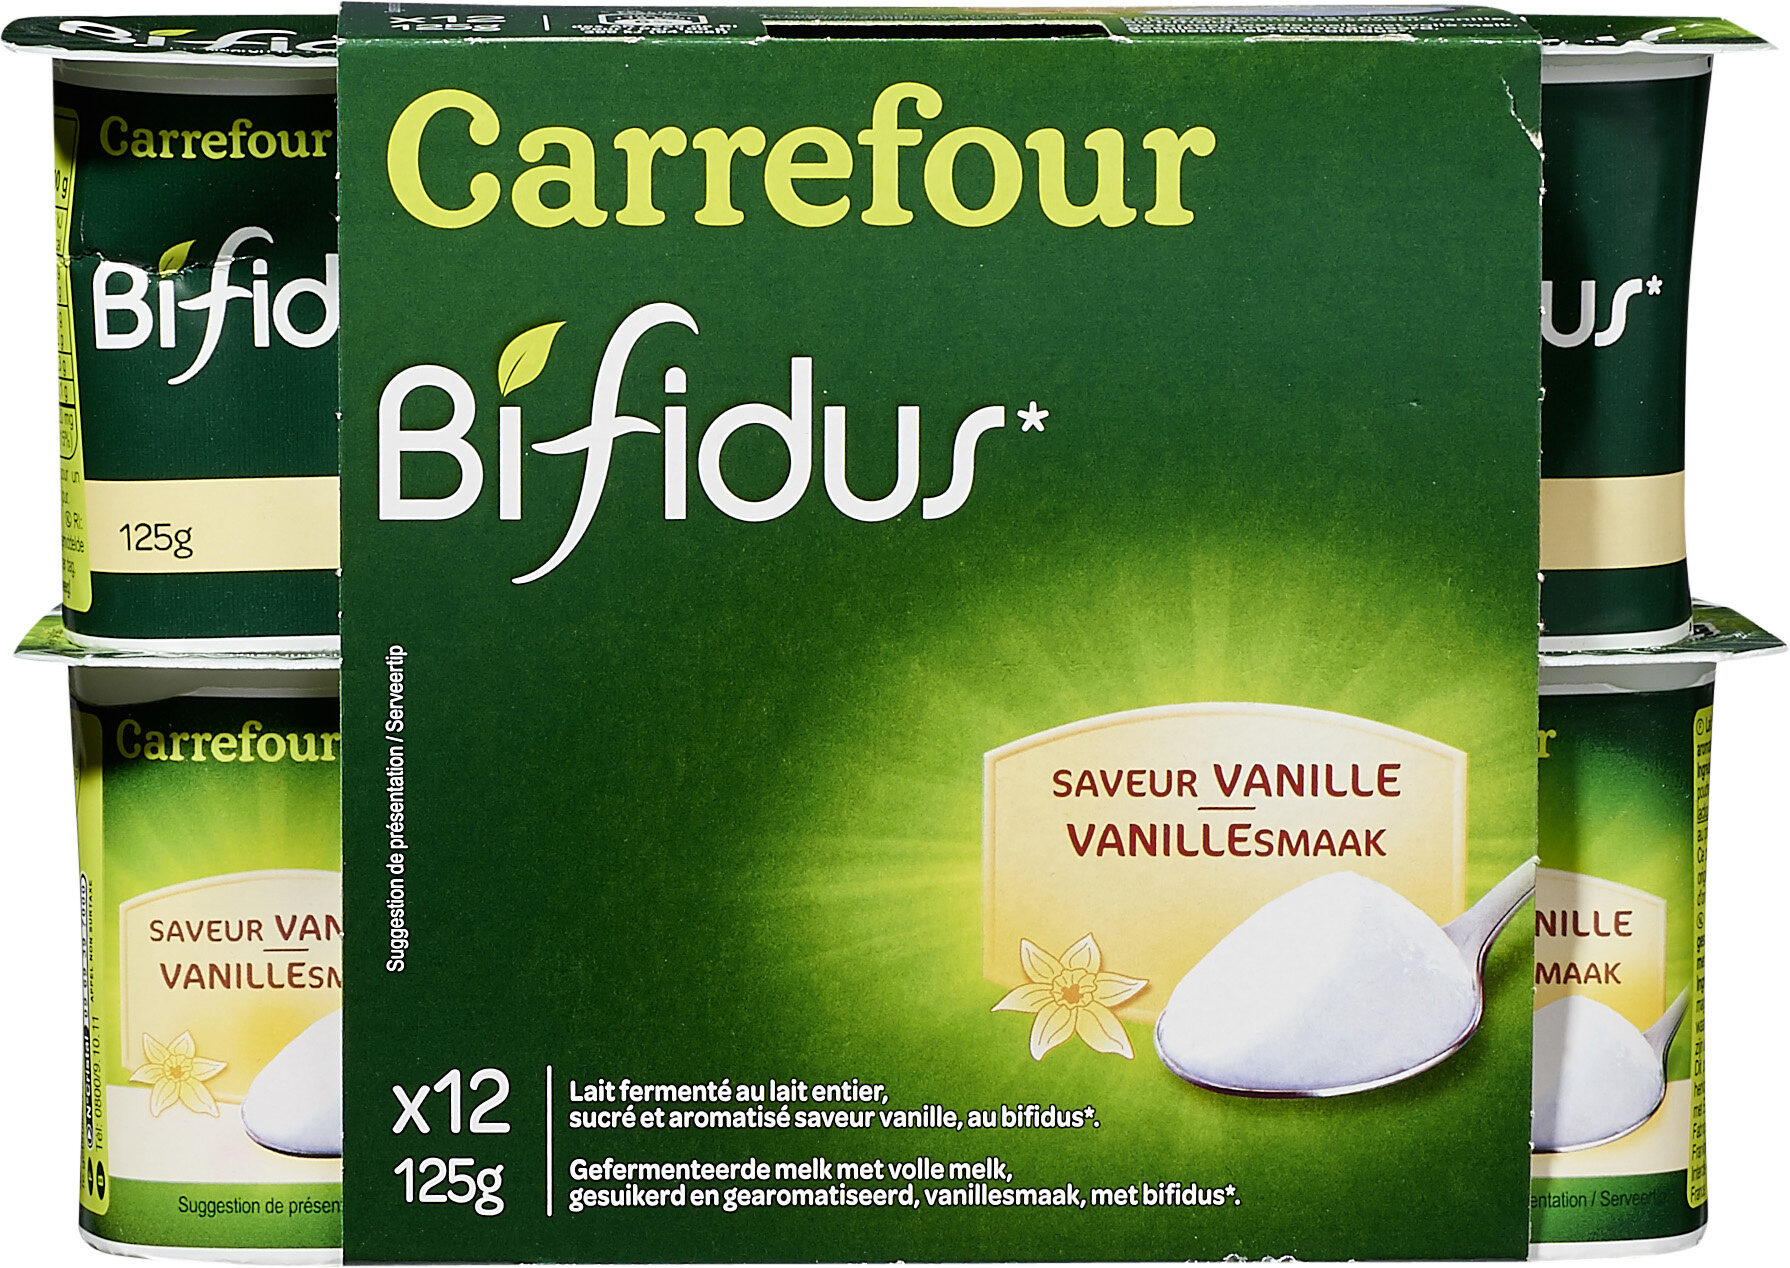 Bifidus* saveur vanille - Product - fr